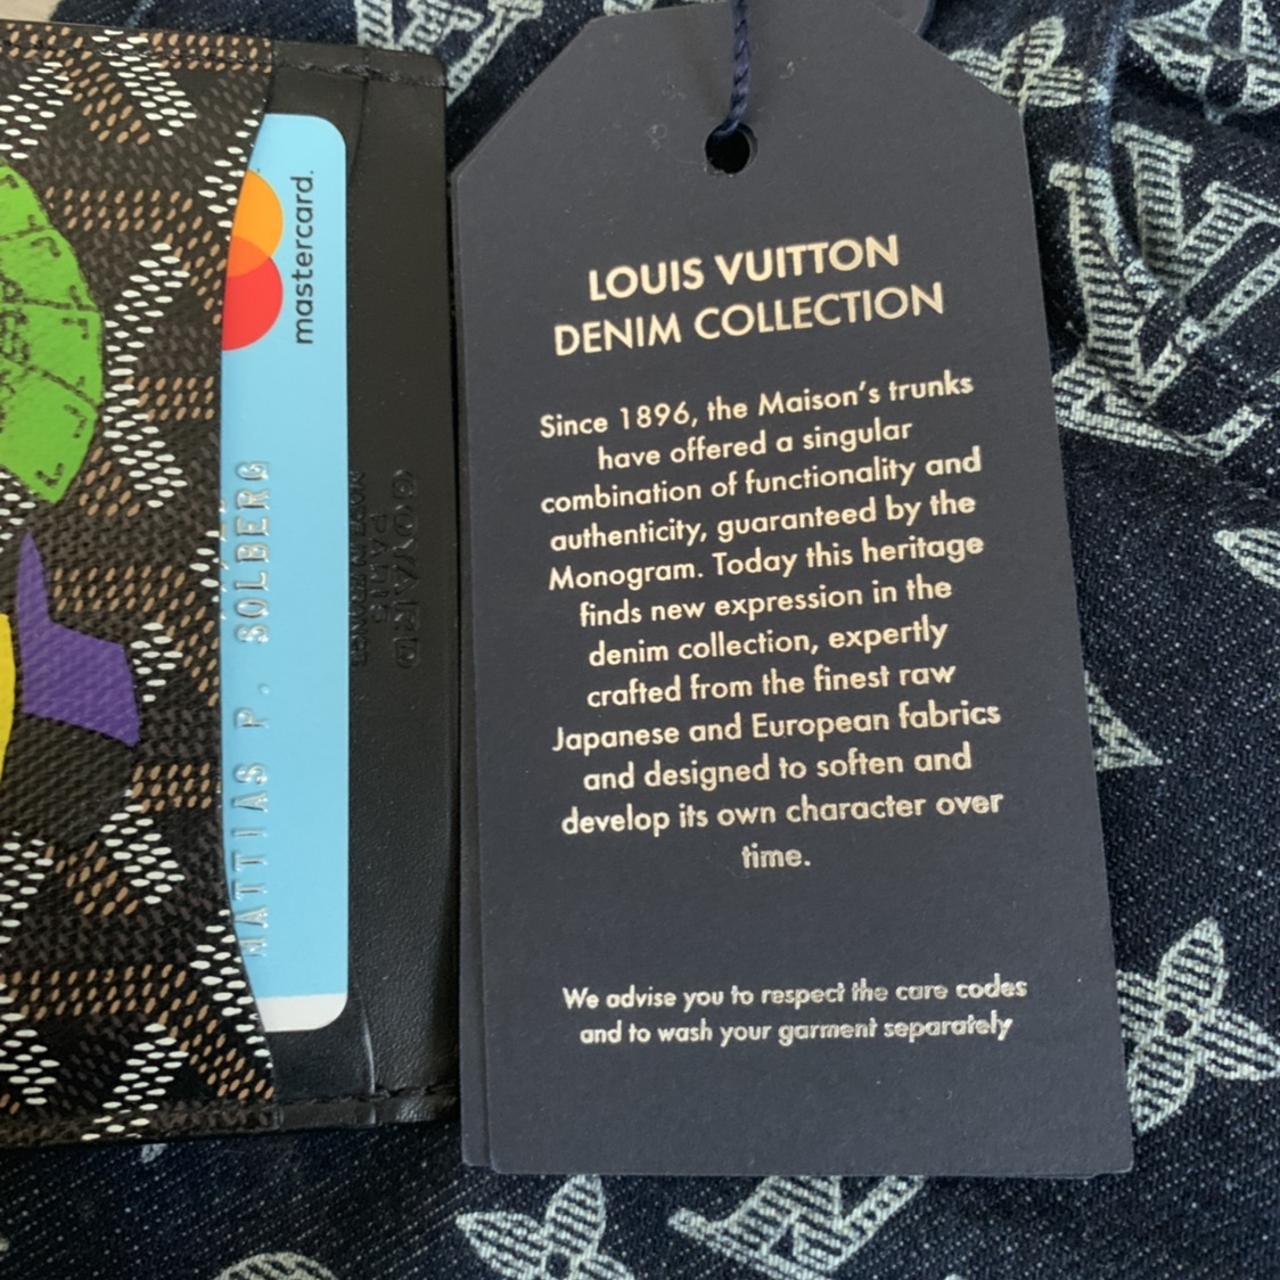 These black Louis Vuitton Silhouette Ankle Sock - Depop